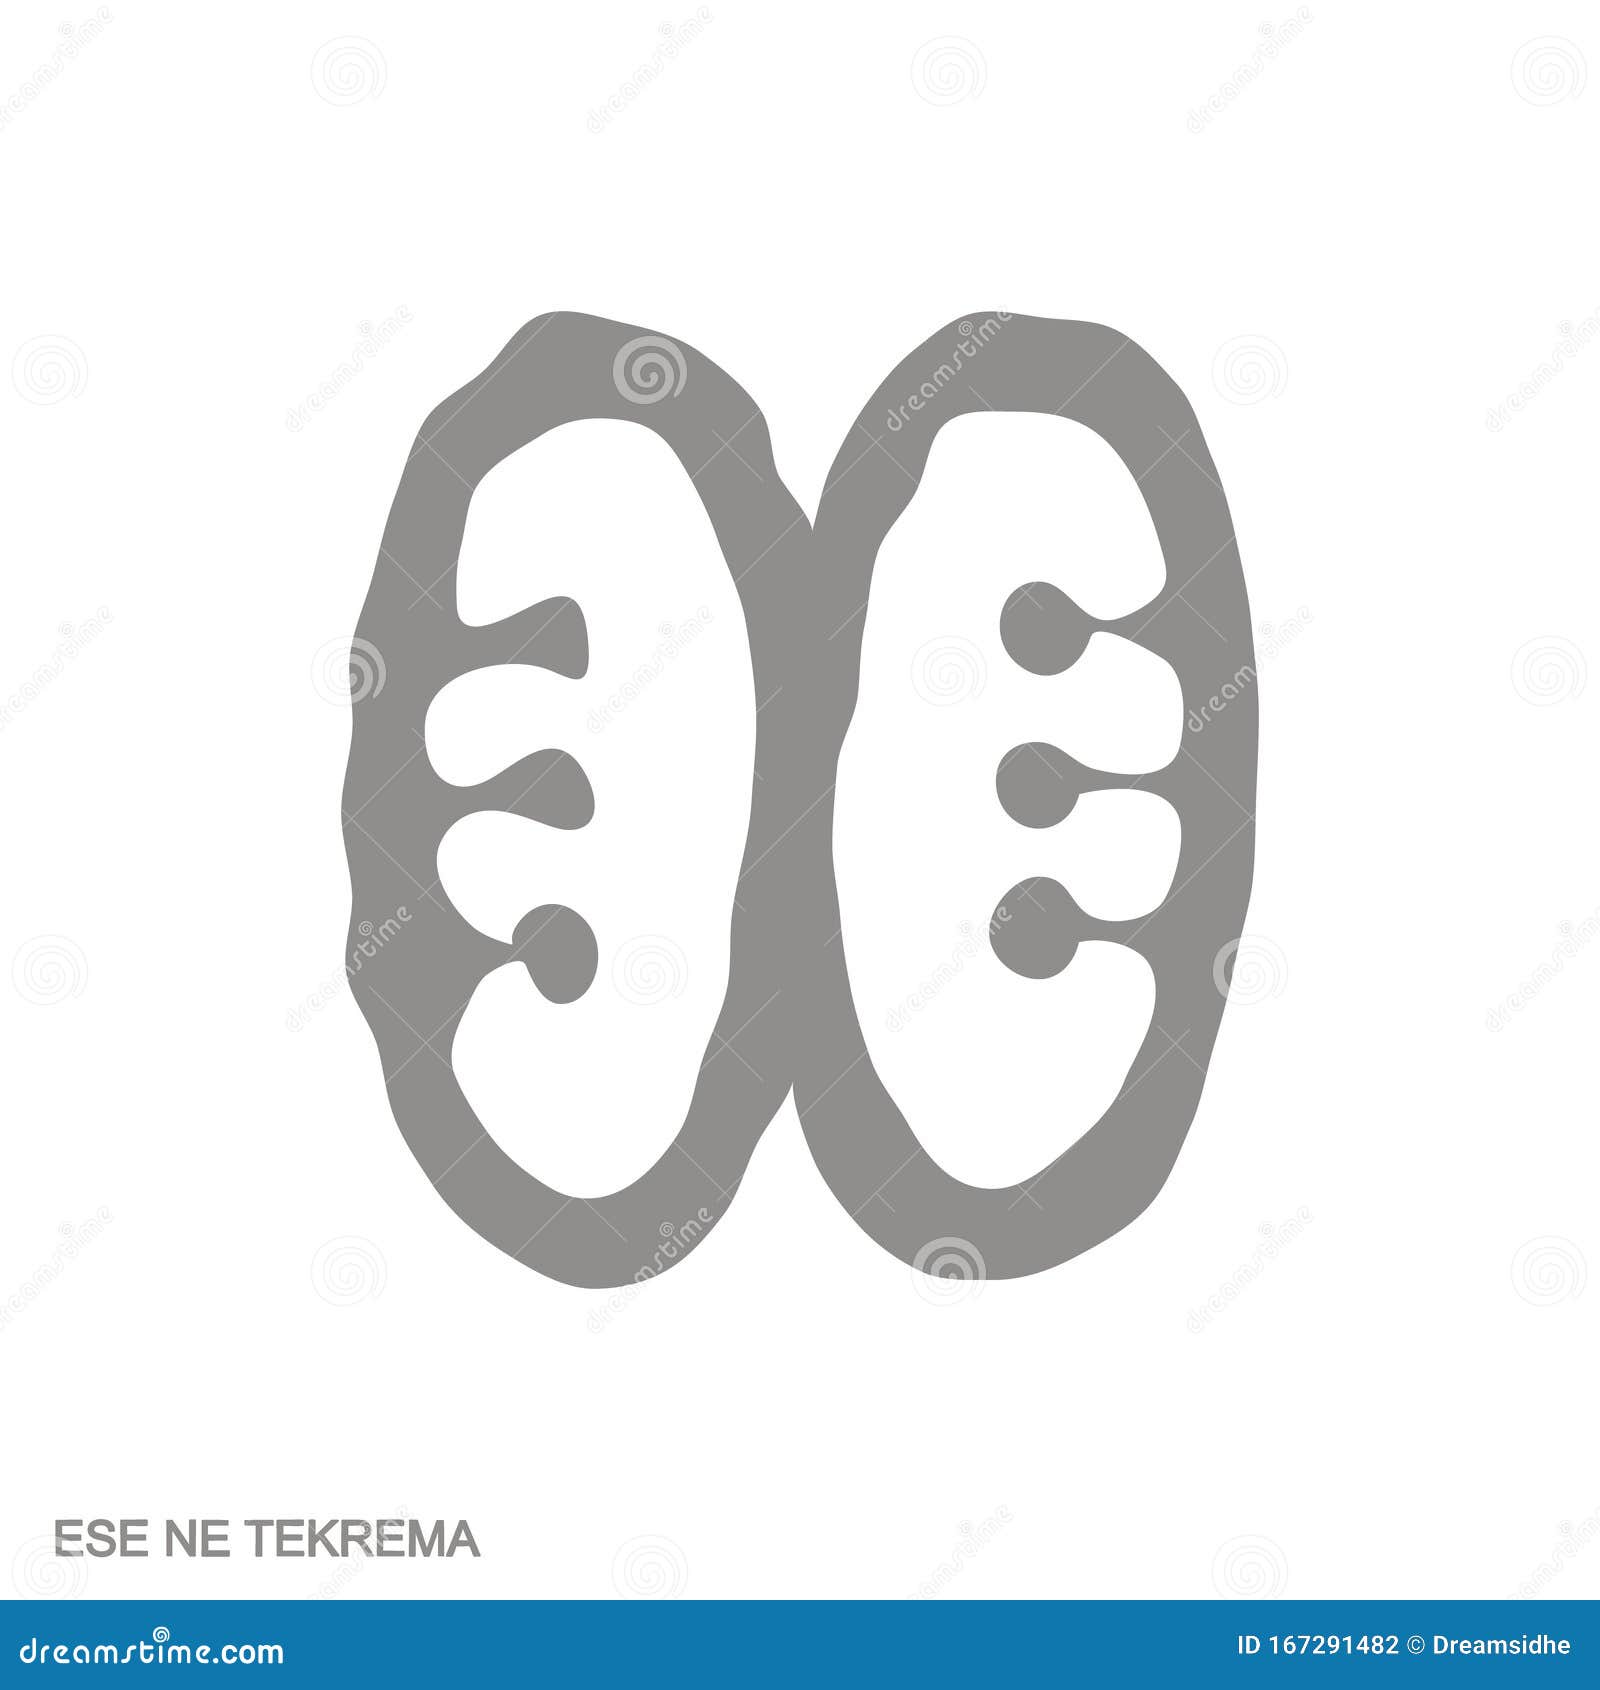 monochrome icon with adinkra  ese ne tekrema